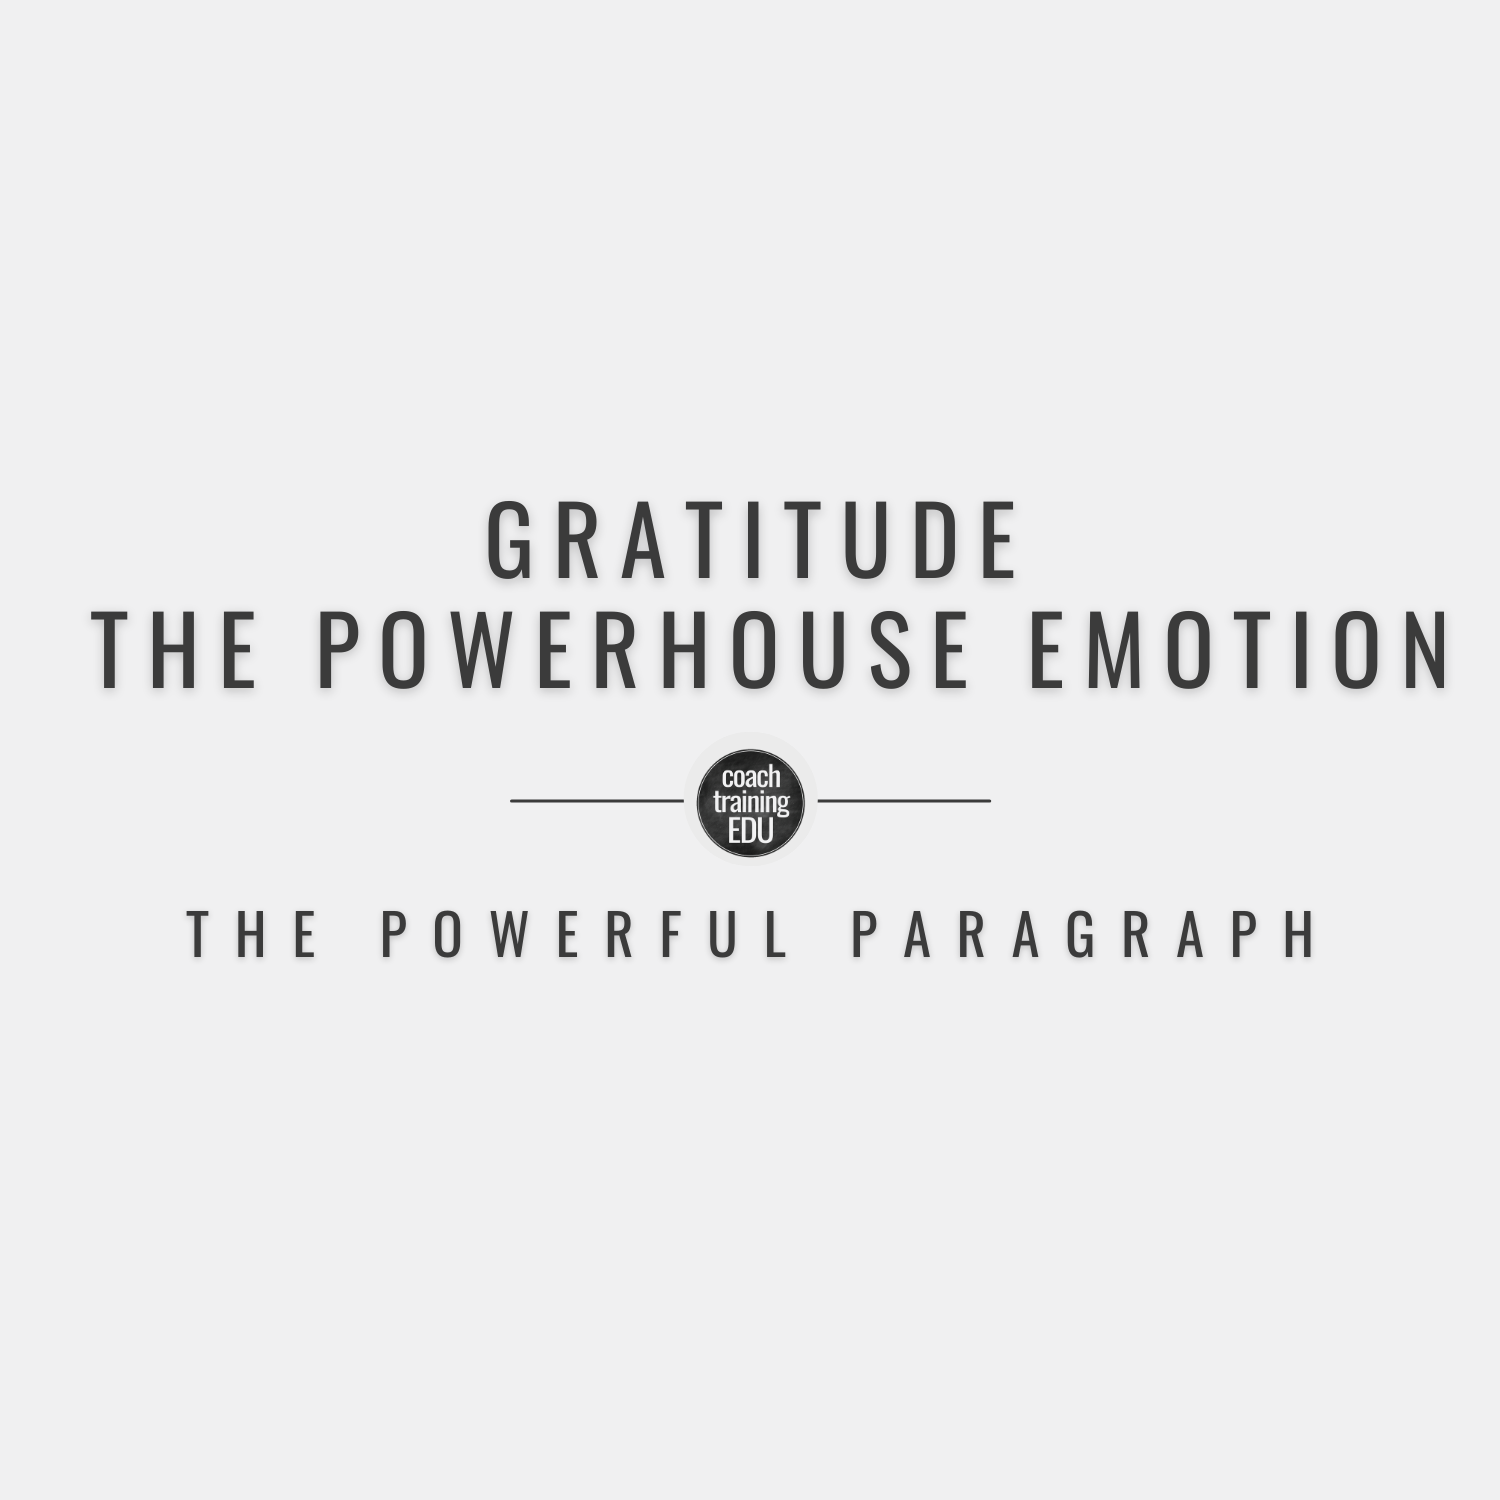 Gratitude - The Powerhouse Emotion